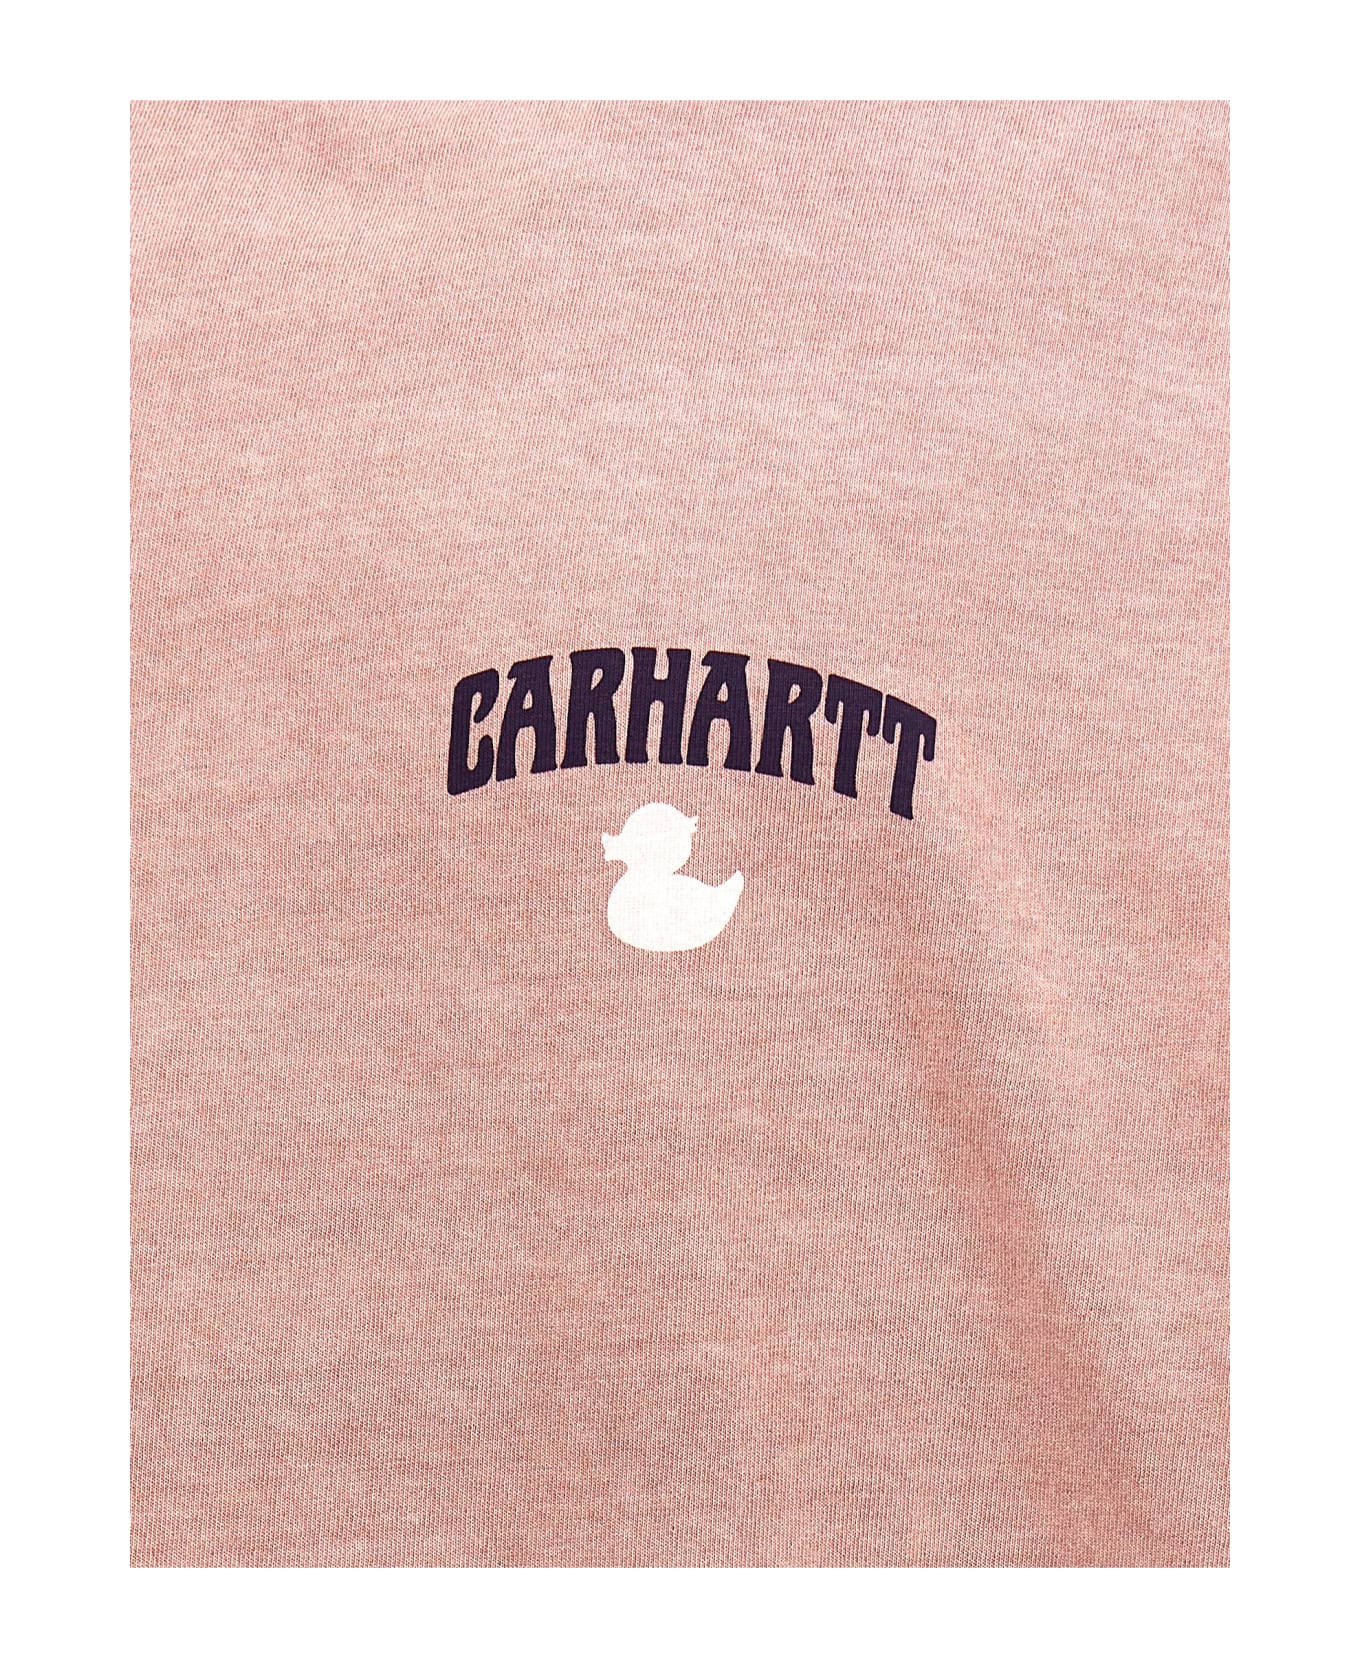 Carhartt WIP 'duckin' T-shirt - Pink シャツ